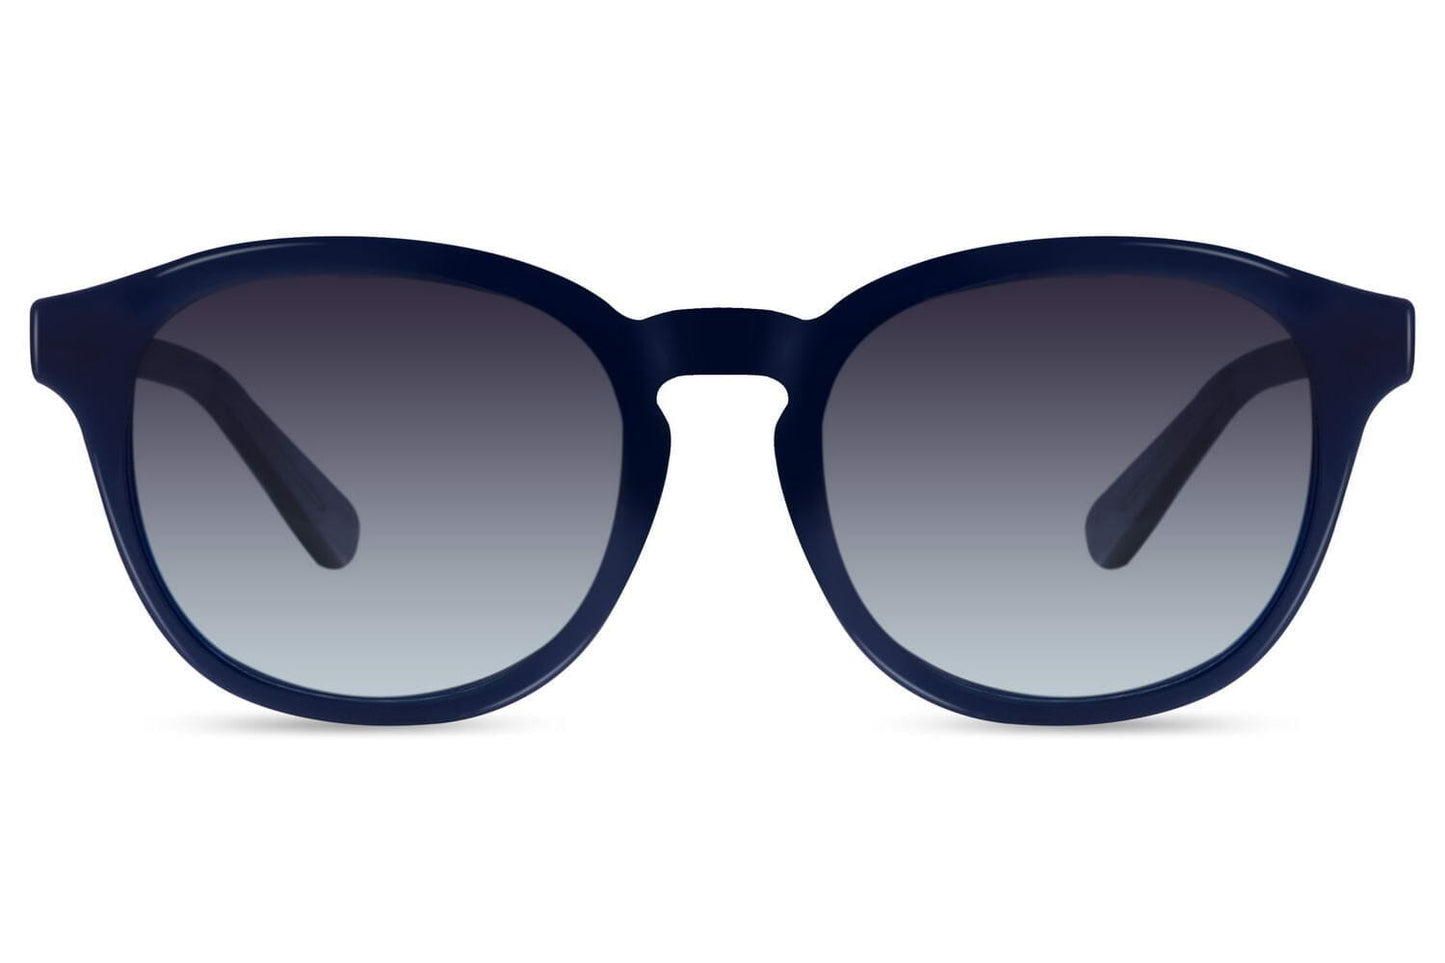 Round balck sunglasses. Front view. Keyhole nose bridge sunglasses.